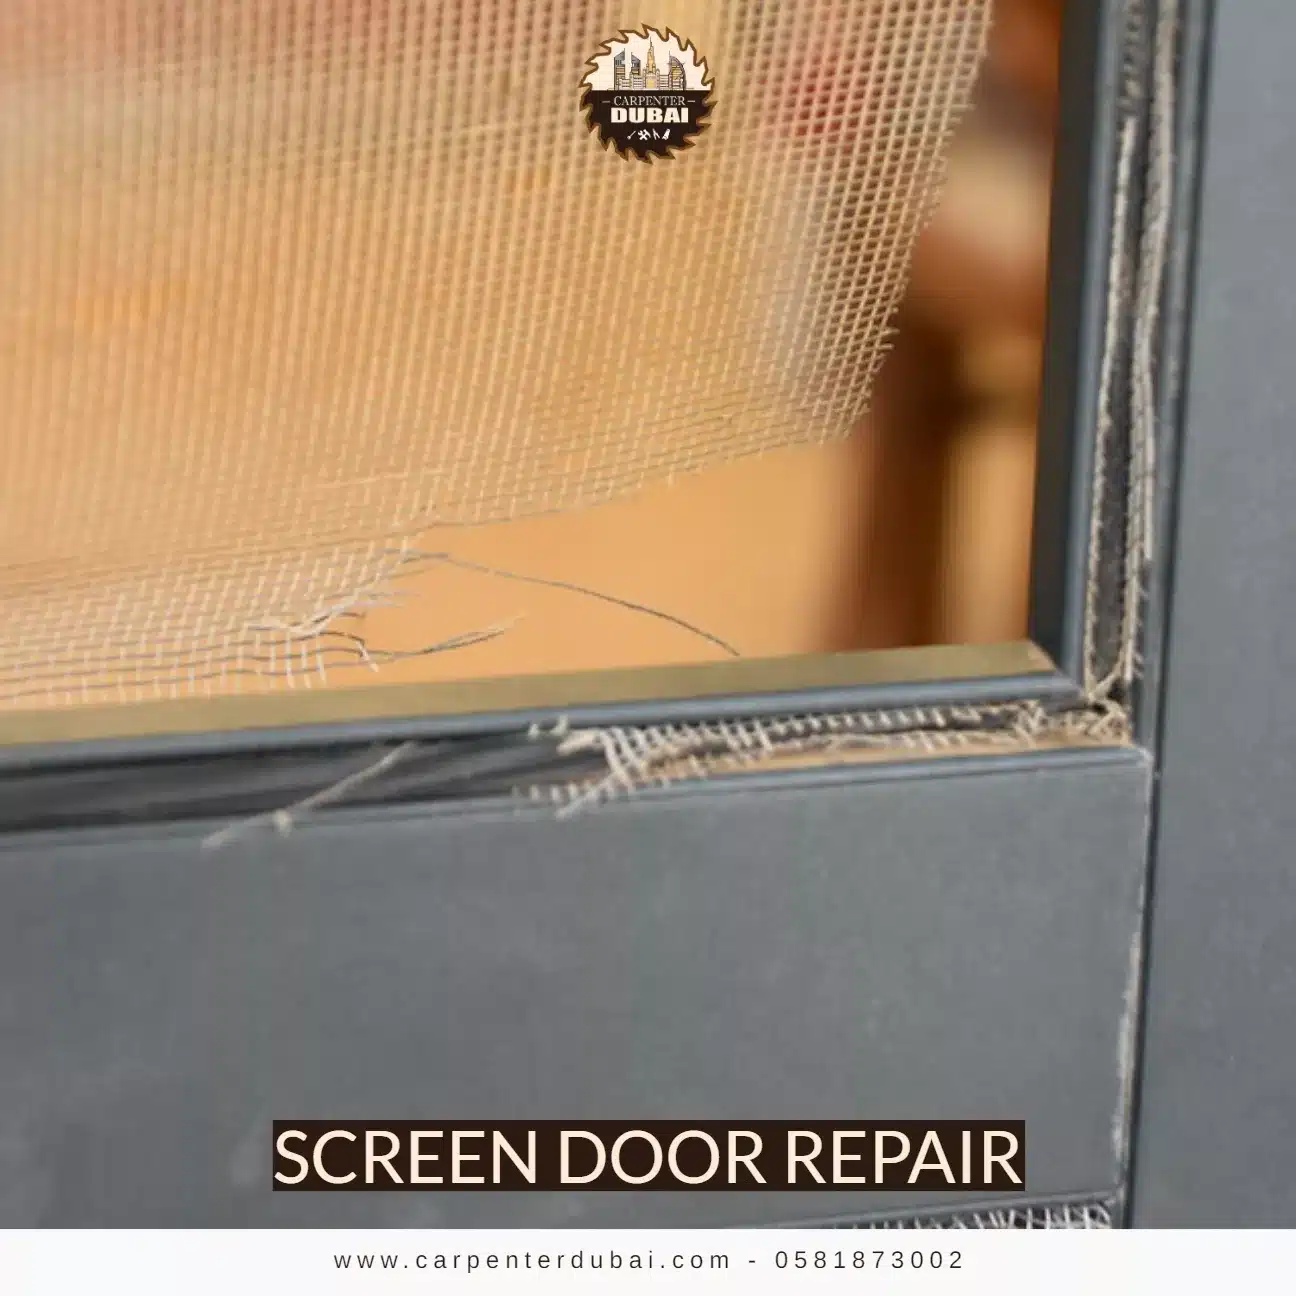 Screen door repair